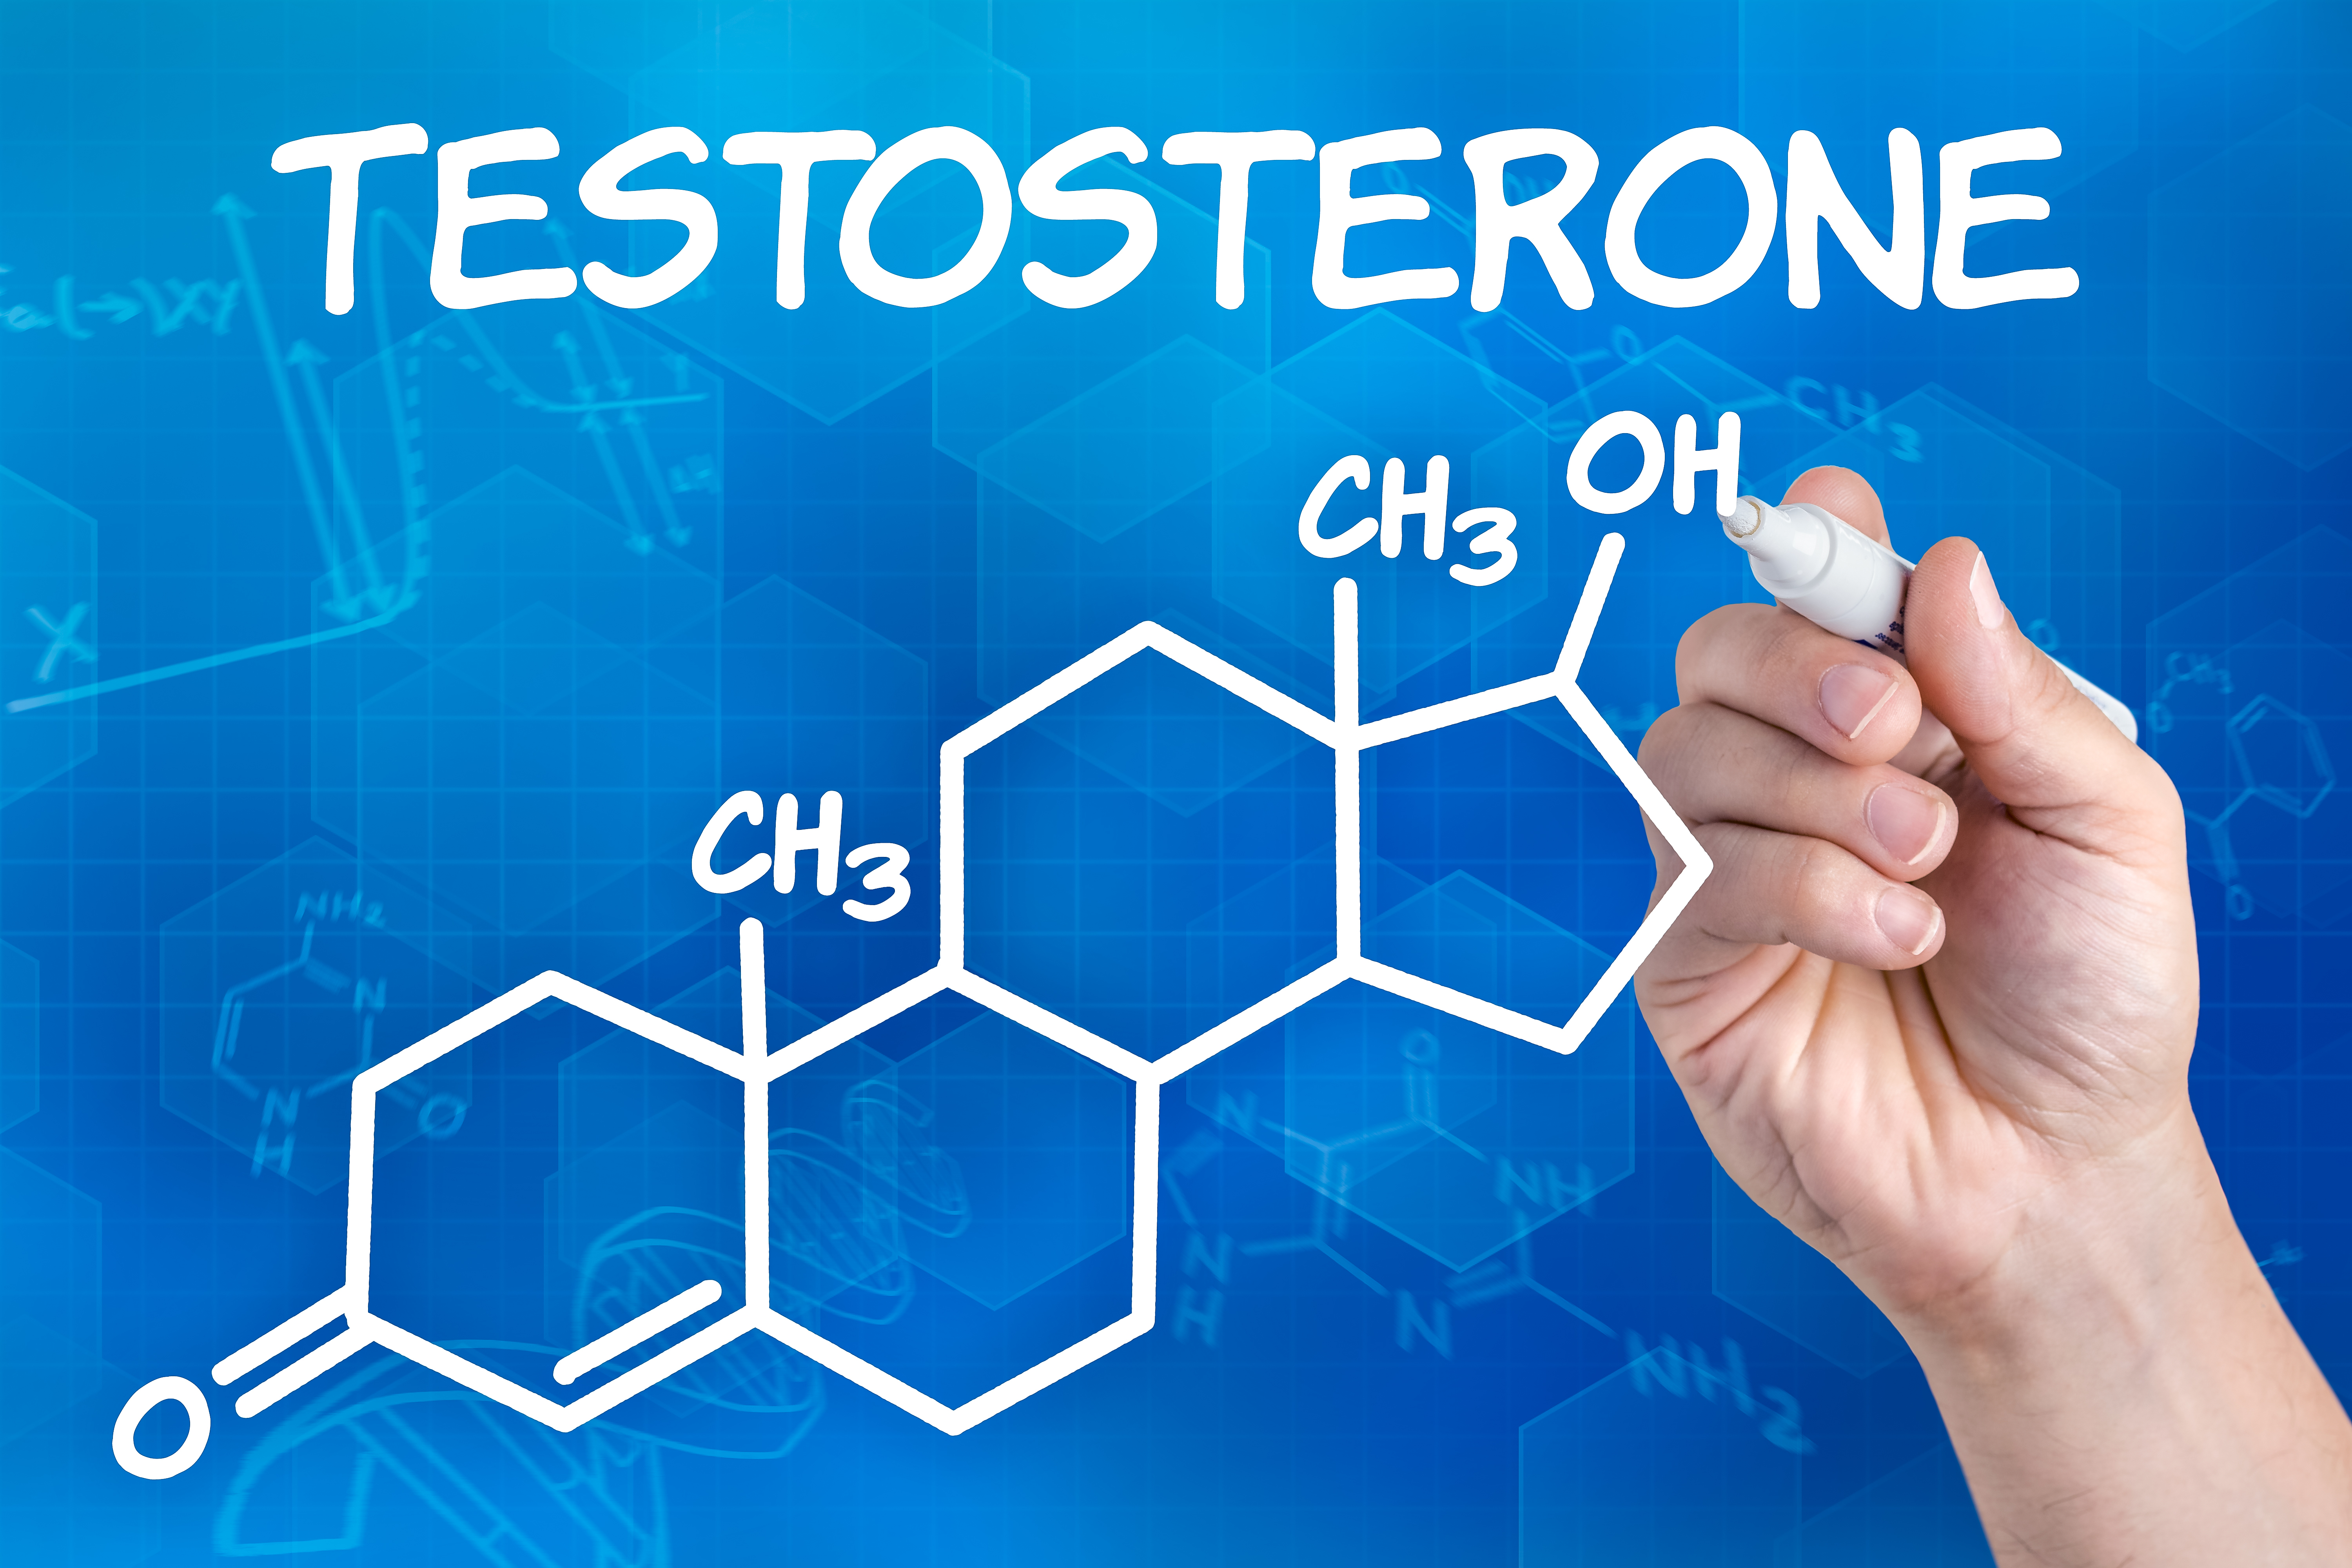 Does Testosterone Decrease or Increase Heart Disease in Men?